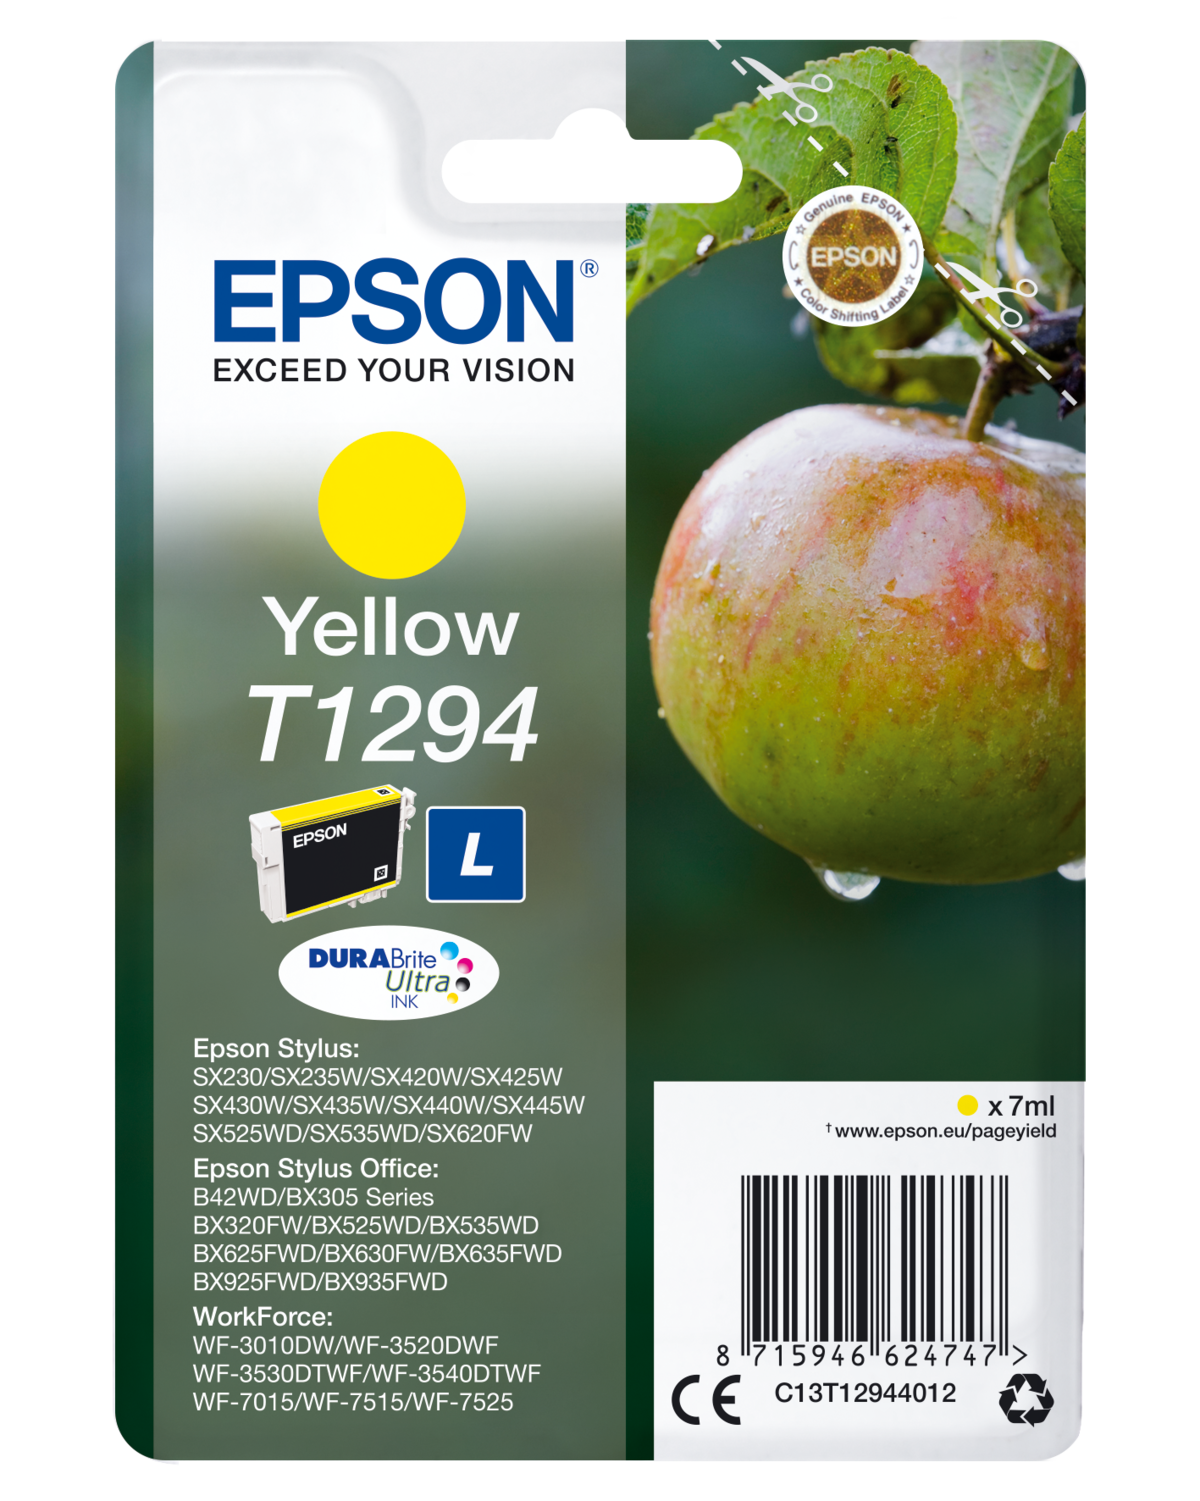 Epson T1294 Y